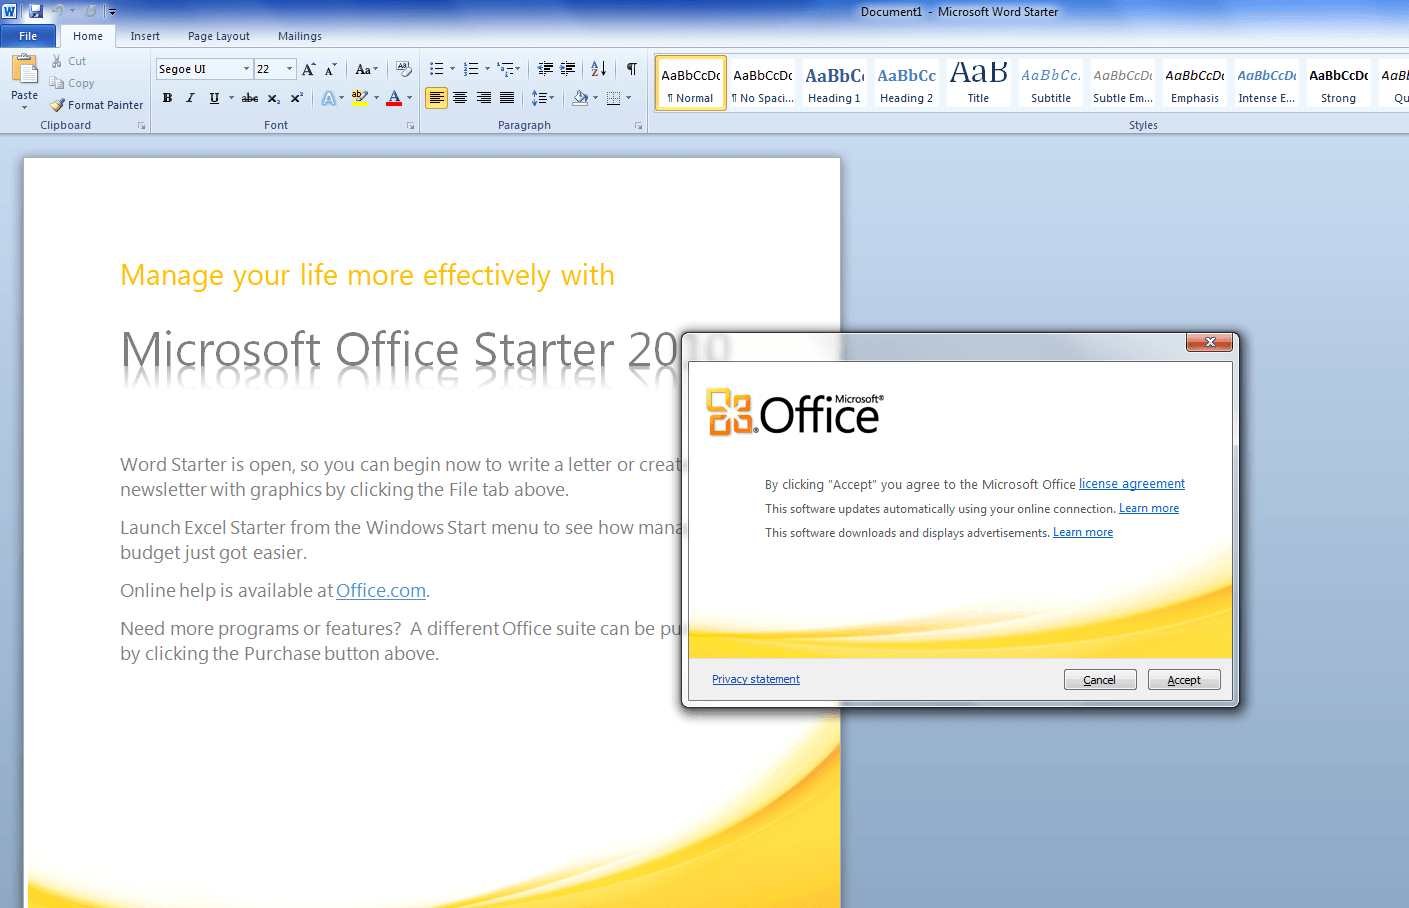 office starter 2010 download 64 bit